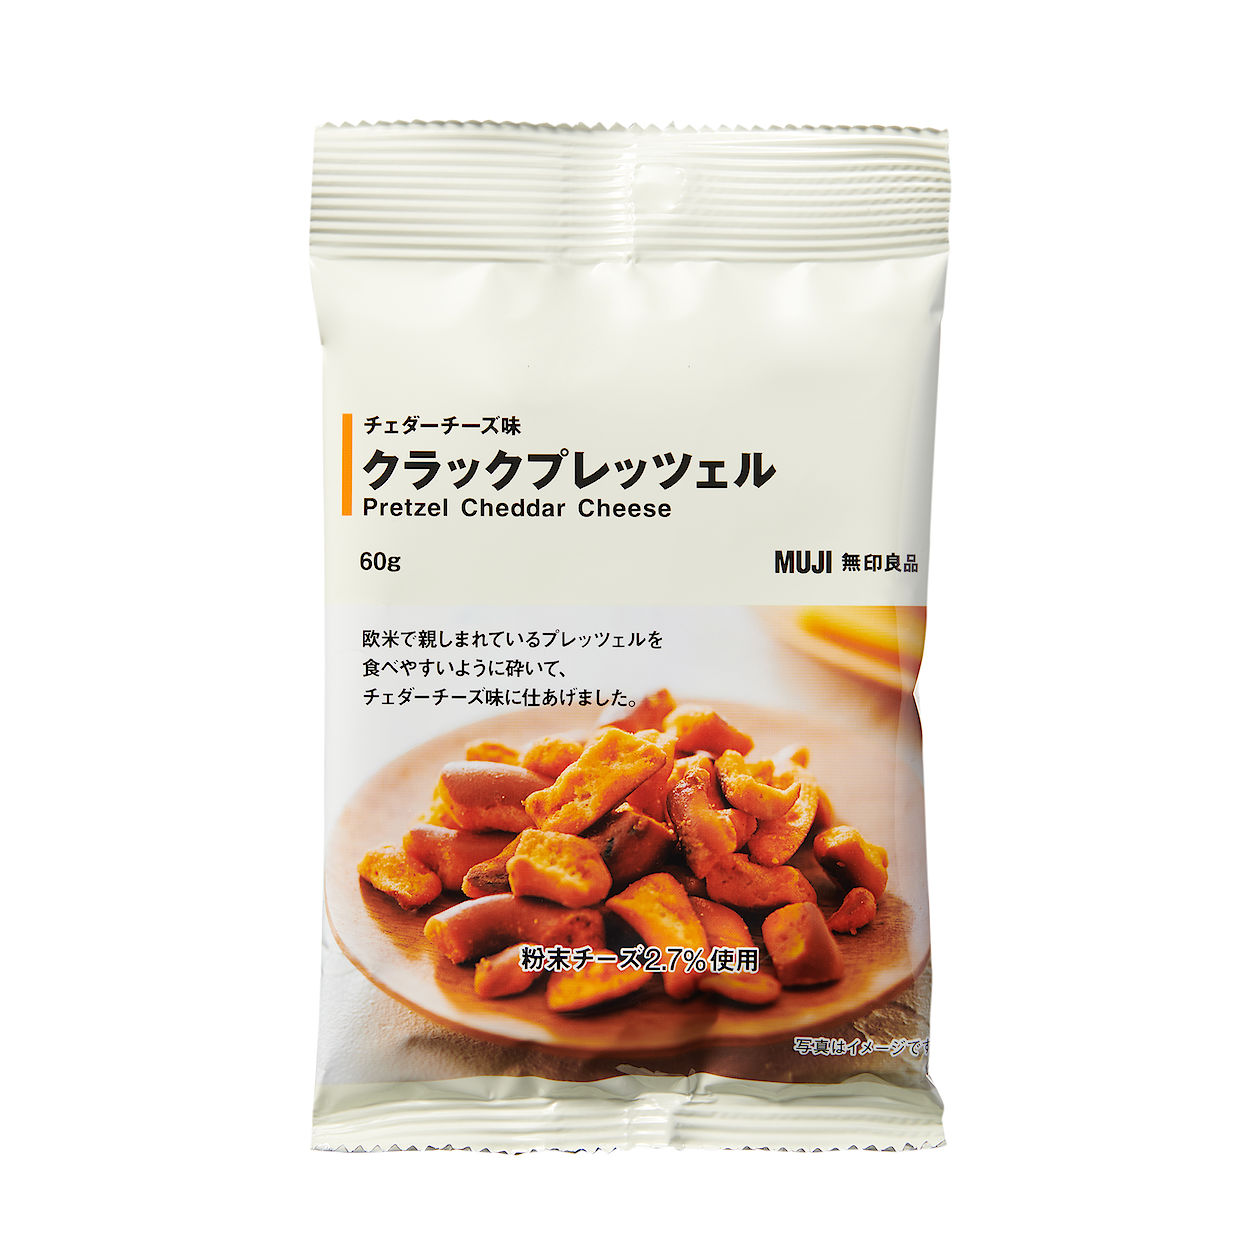 muji pretzel chedoar cheese-United States-Japan Online Shopping